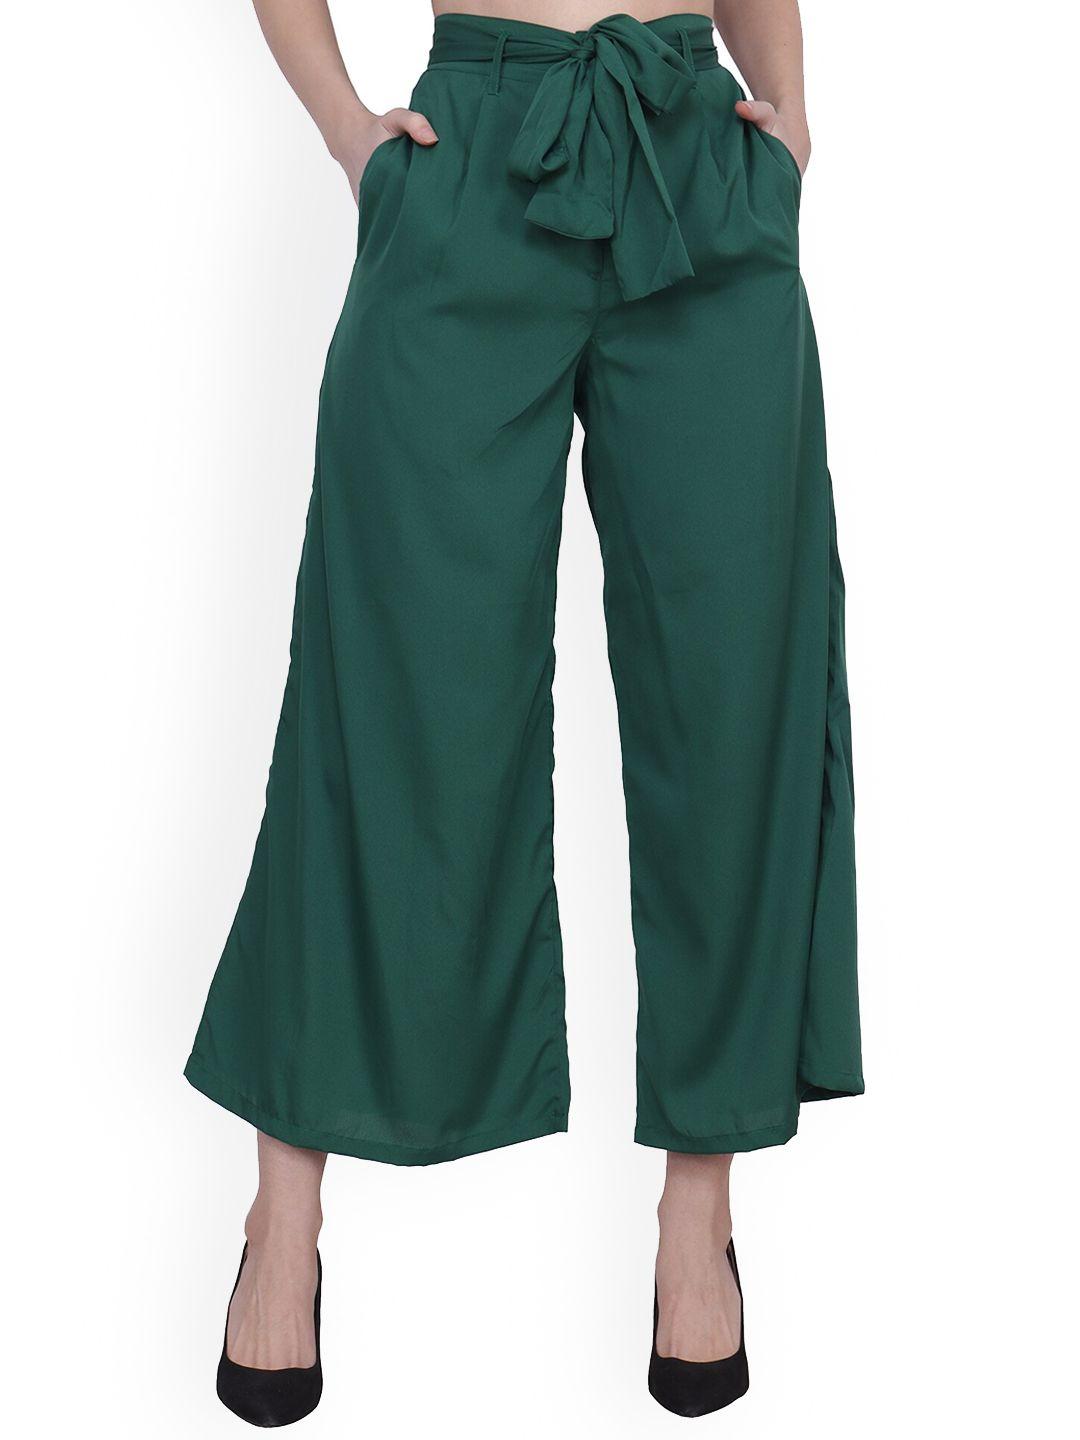 frempy women green original culottes trousers